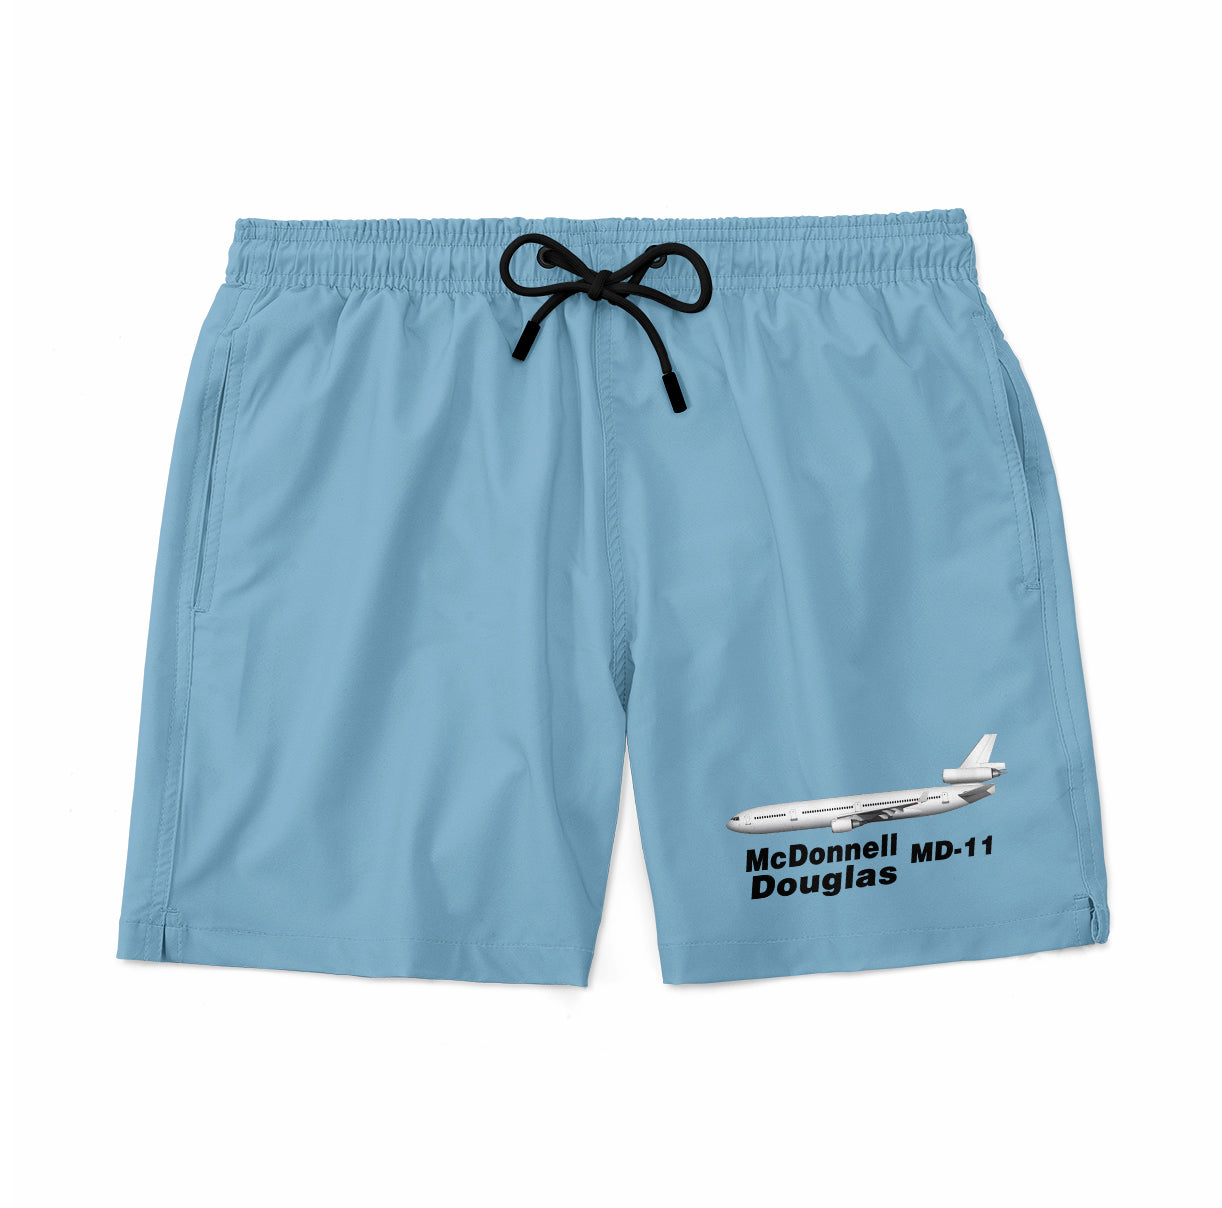 The McDonnell Douglas MD-11 Designed Swim Trunks & Shorts